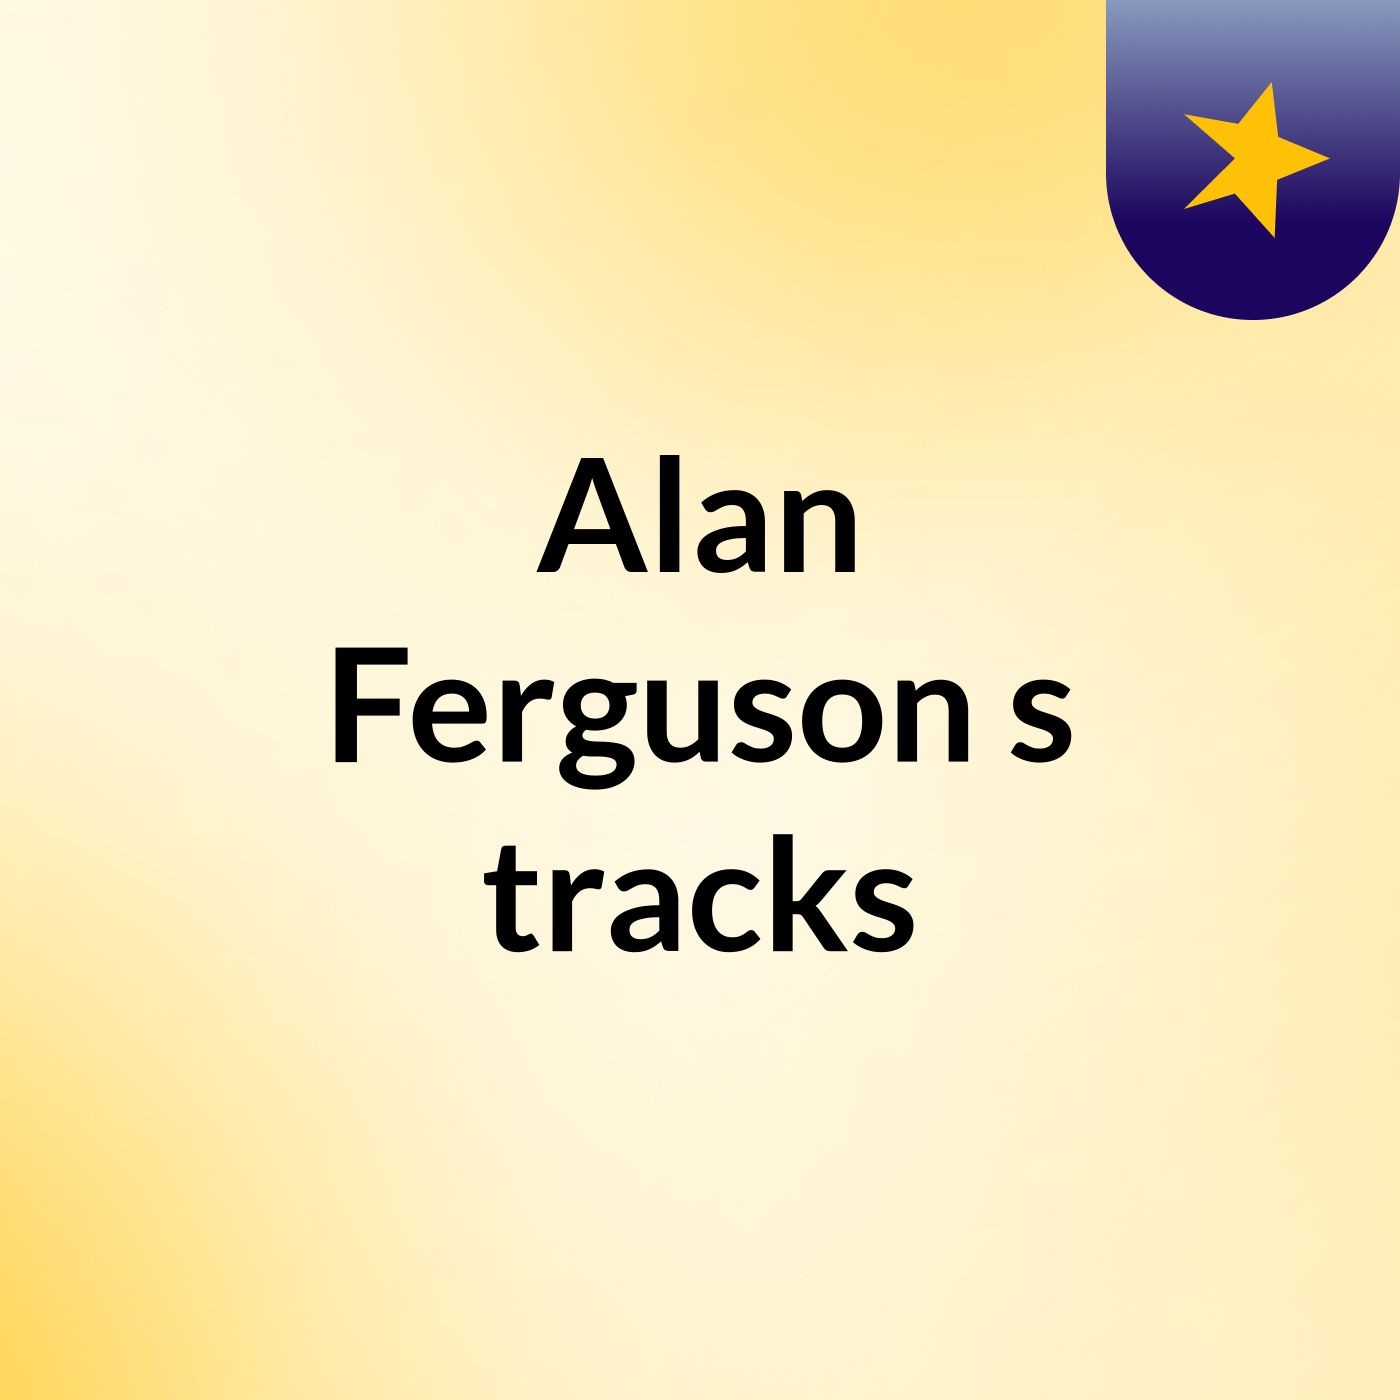 Alan Ferguson's tracks